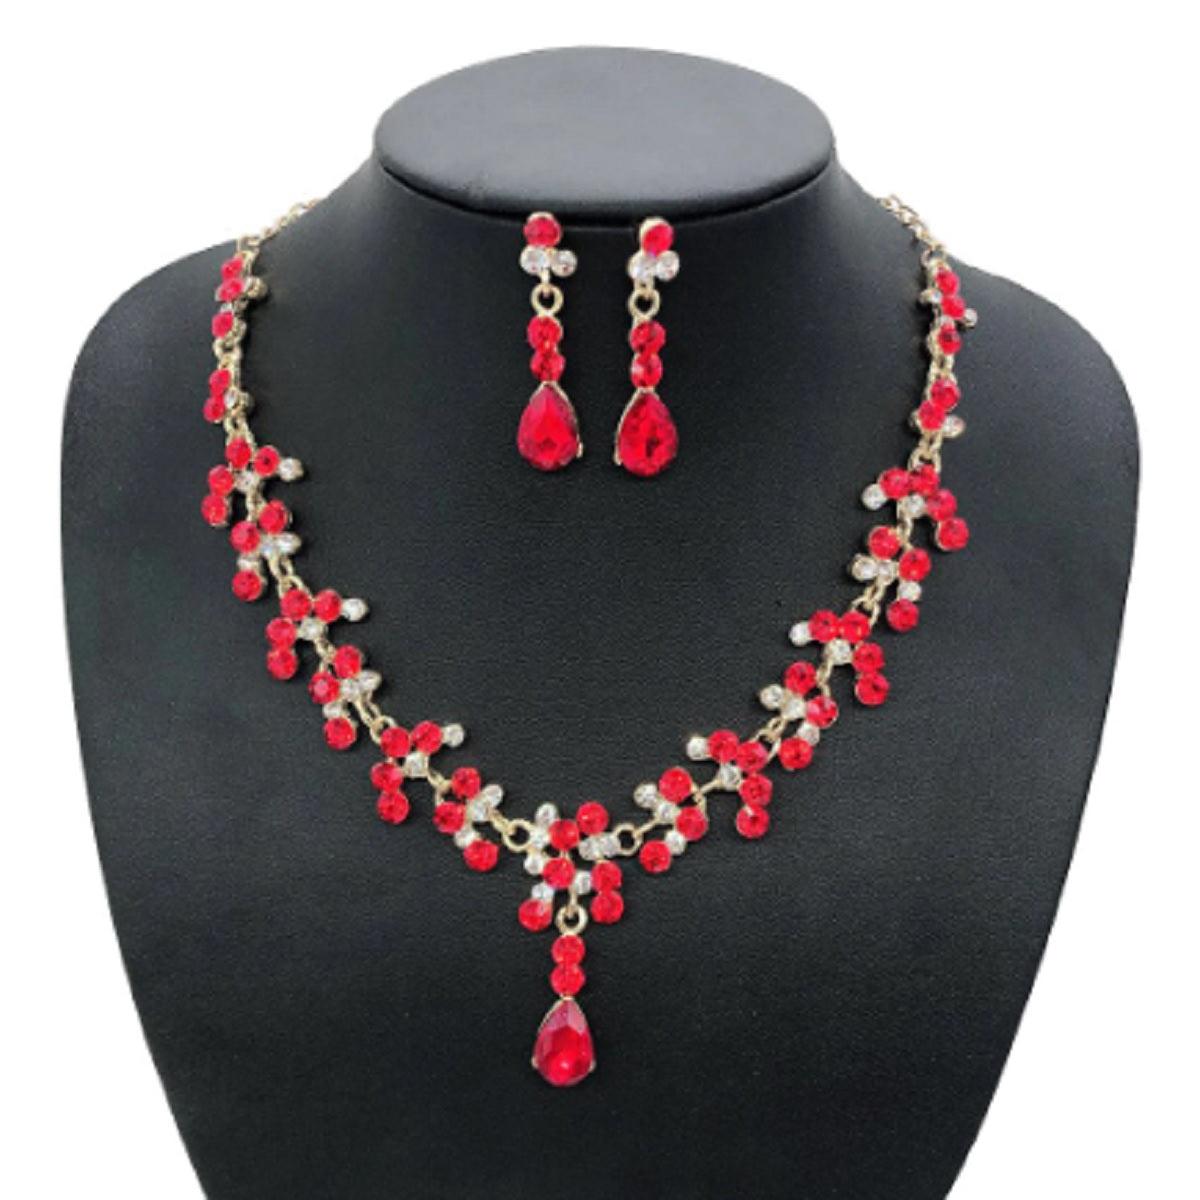 Dazzling Premium Rhinestone Women's Jewelry Set - Water Drop Style - dealskart.com.au